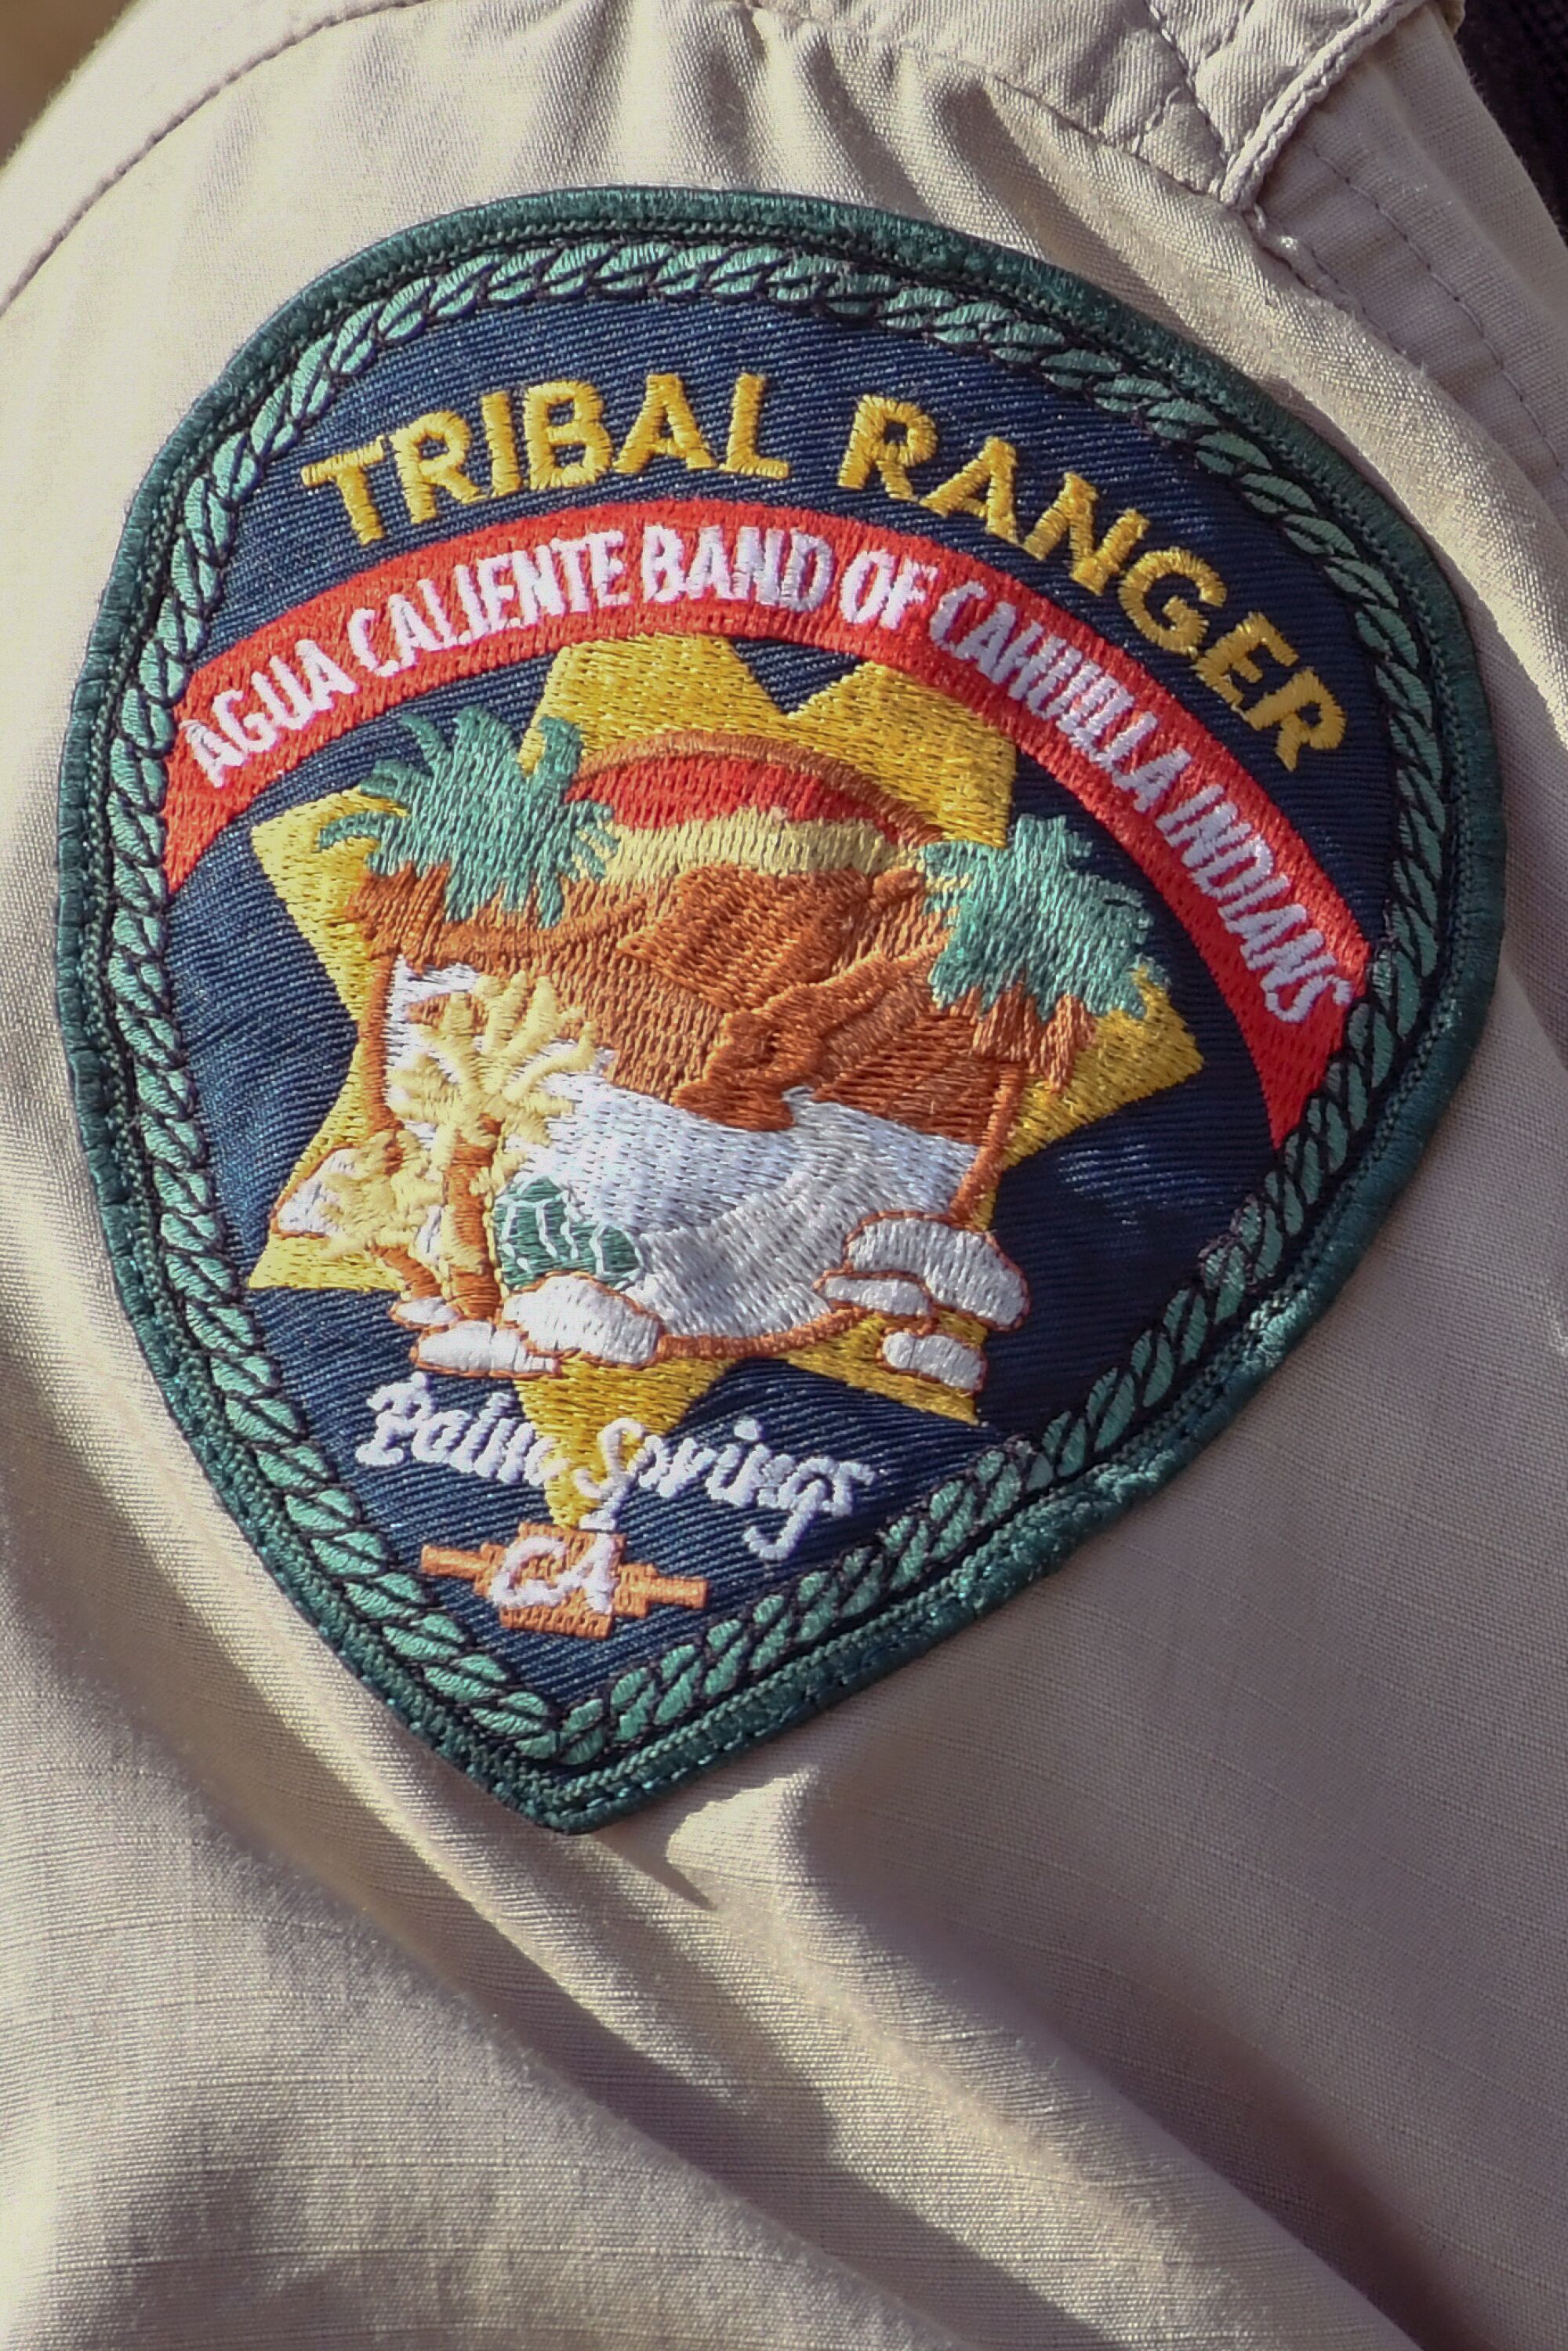 A close-up of a tribal ranger patch on a uniform